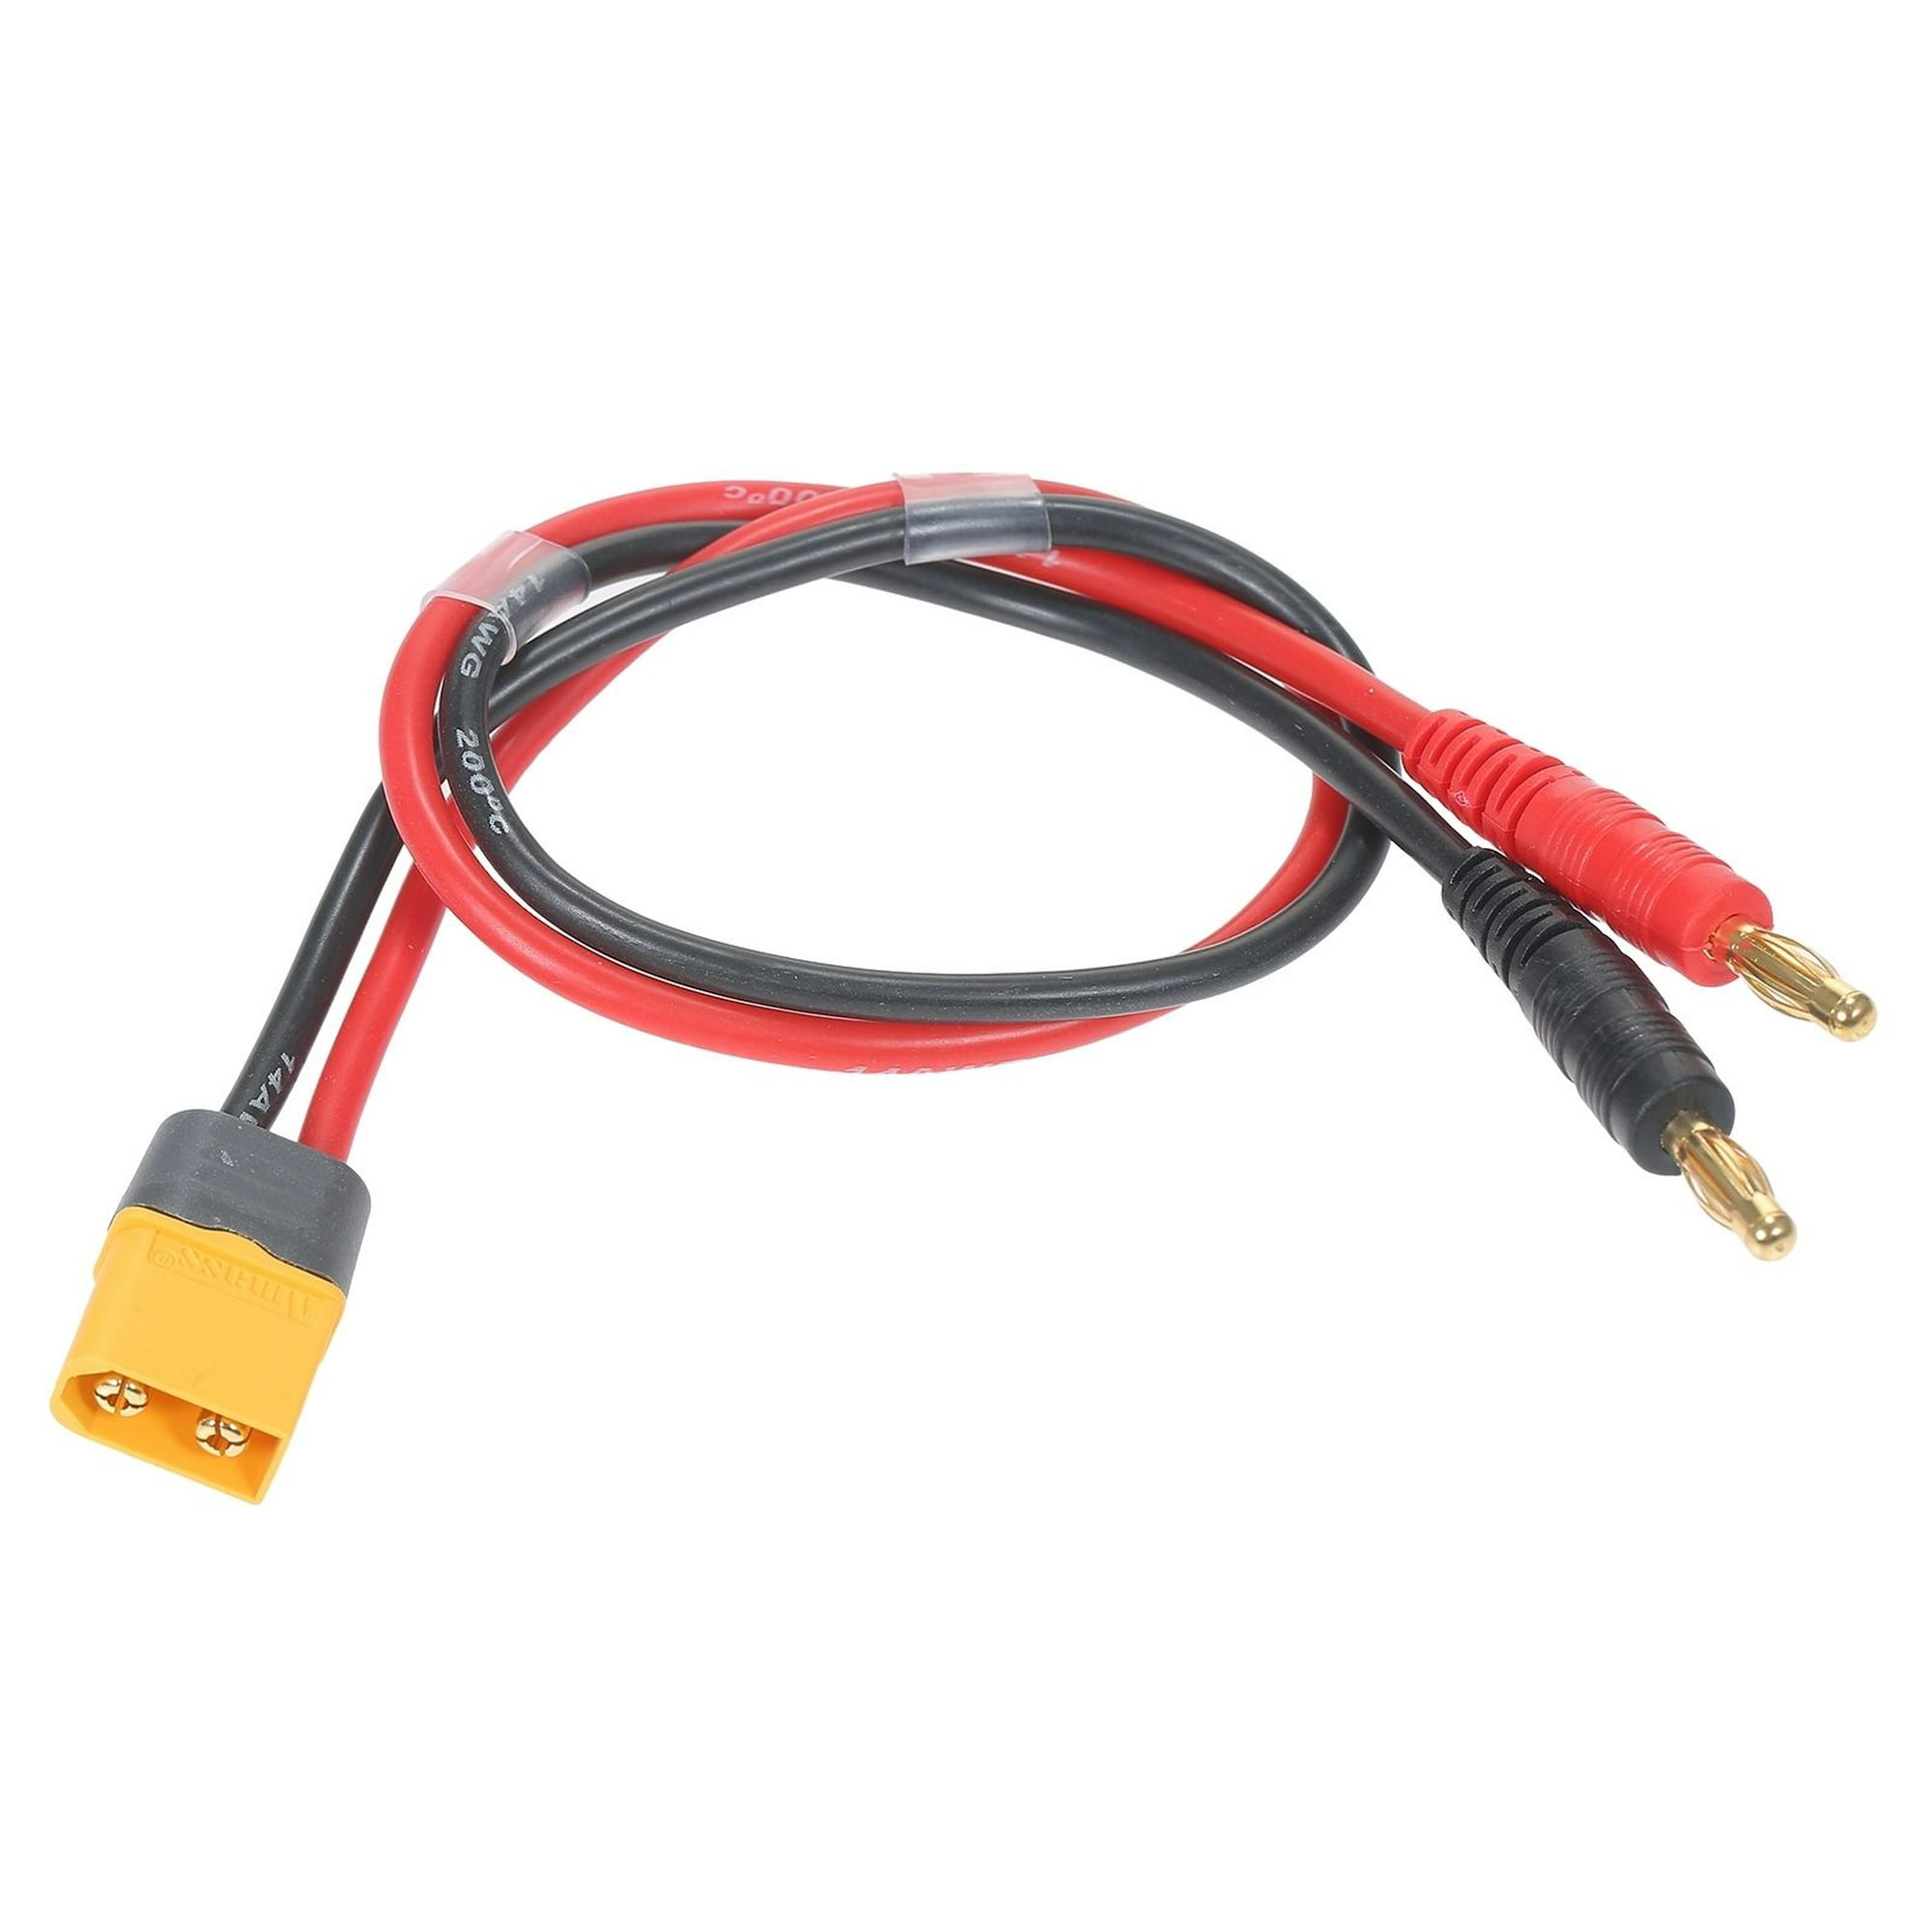 Cable del adaptador de corriente - Enchufe EC5 hembra Enchufe XT60 macho